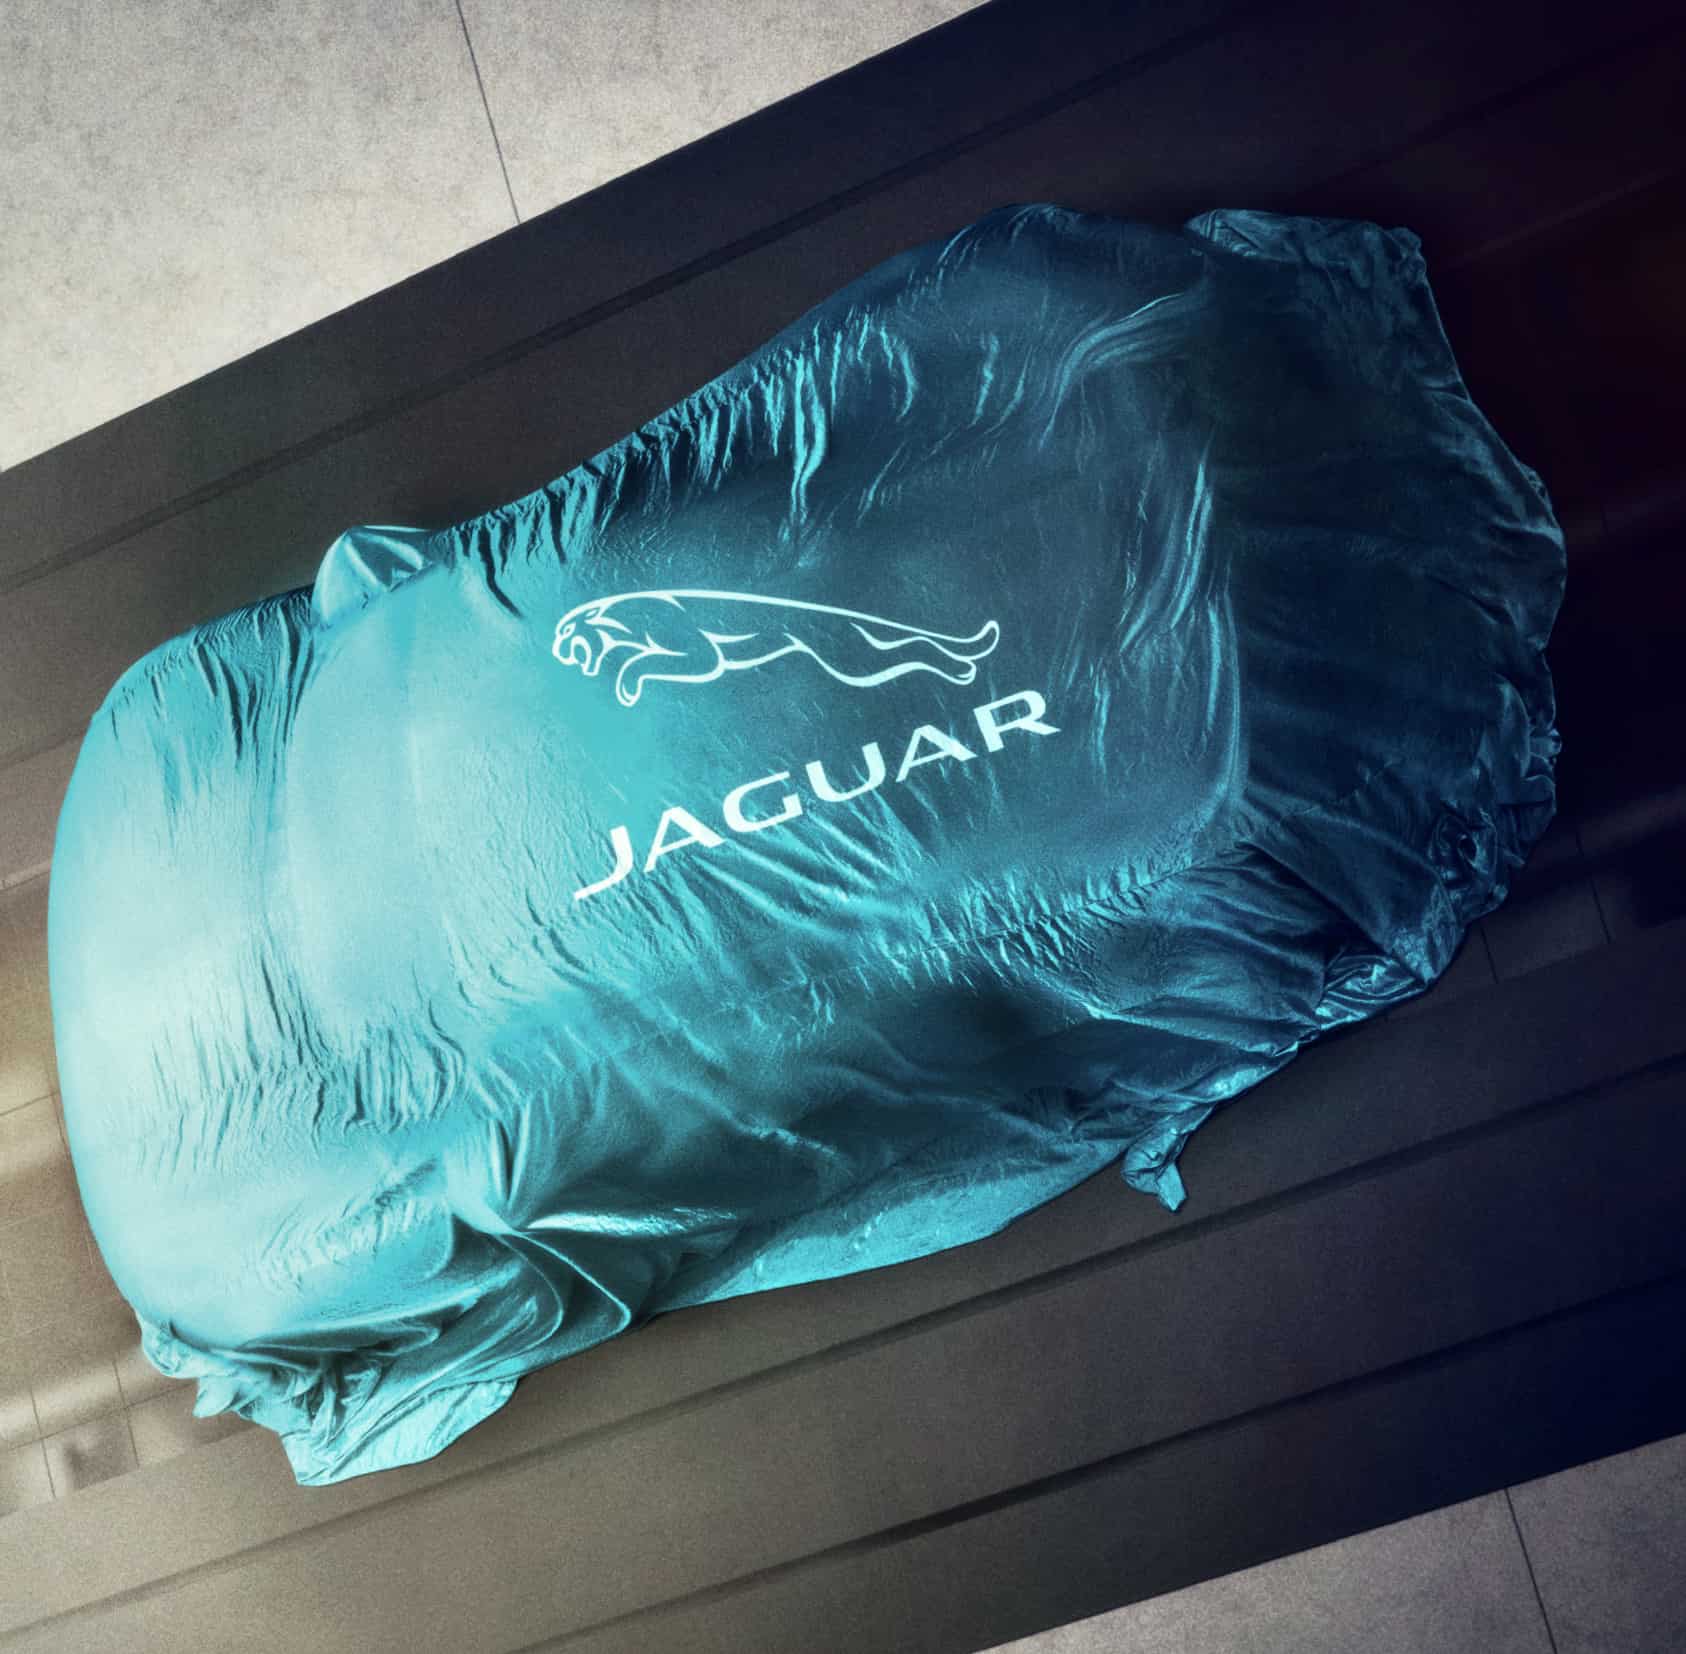 Jaguar, Land Rover announce plan to go allelectric